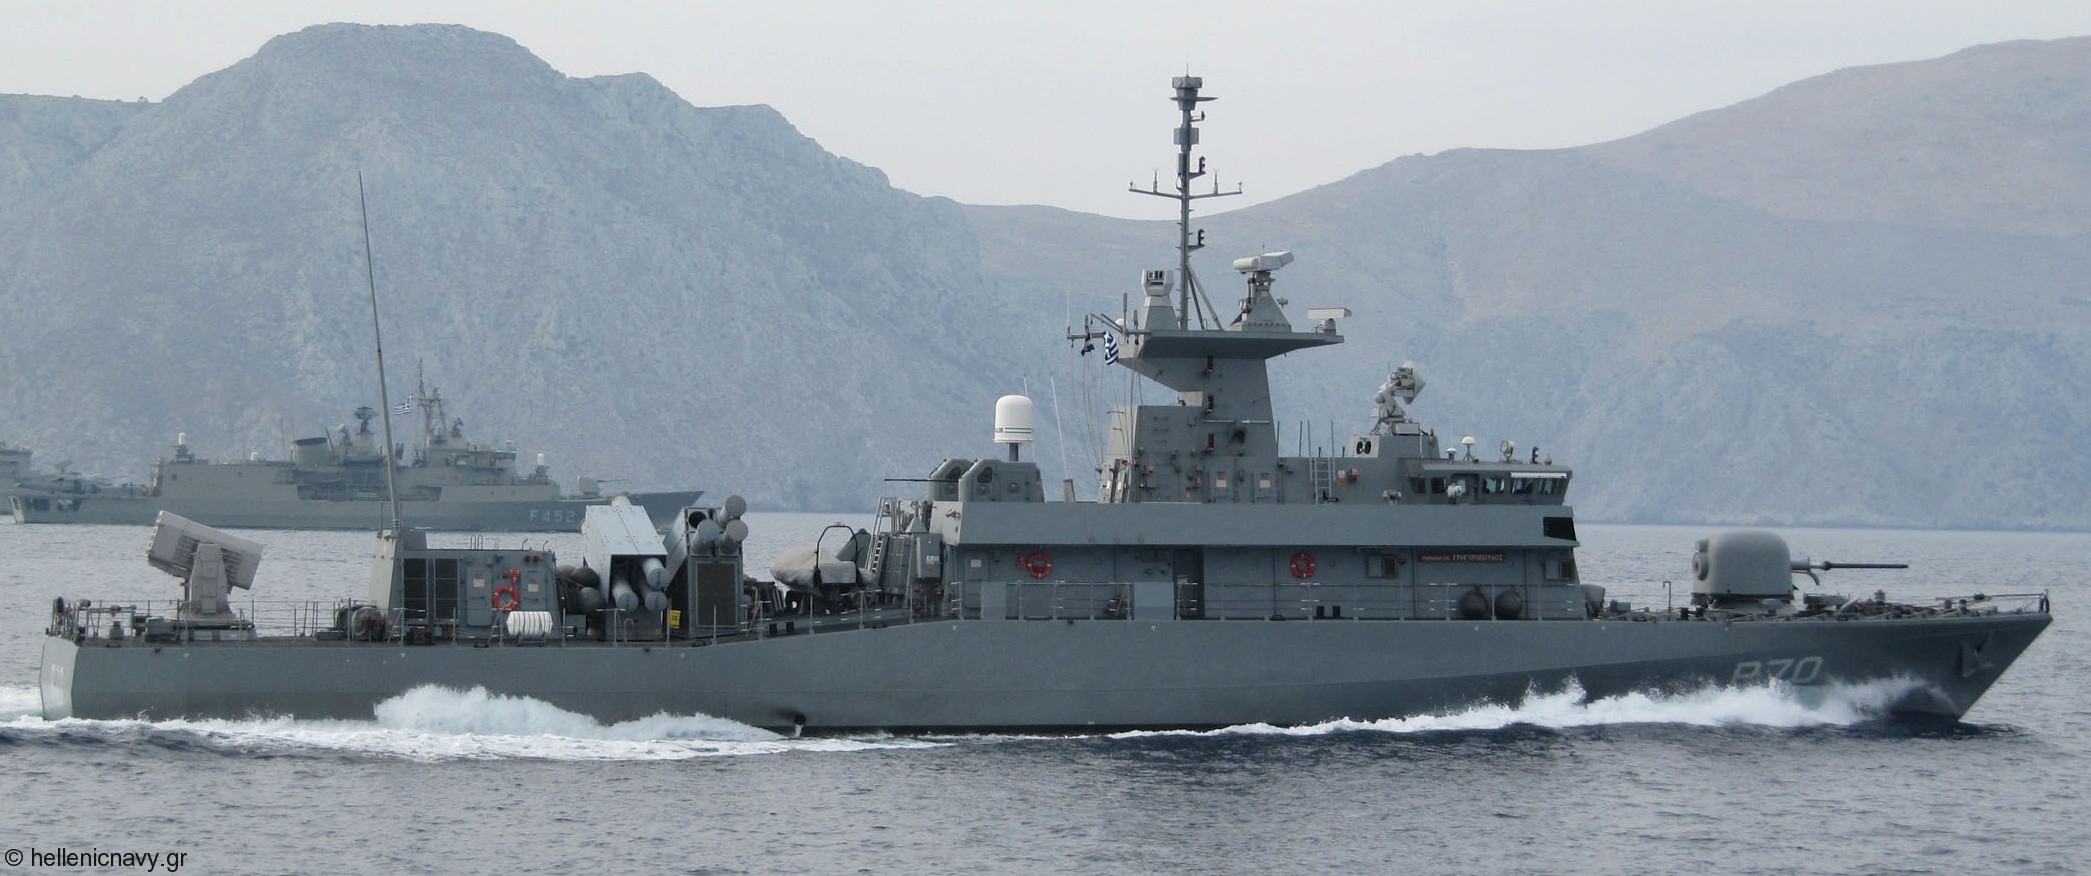 p-70 hs ypoploiarchos grigoropoulos roussen super vita class fast attack missile craft facm hellenic navy 03